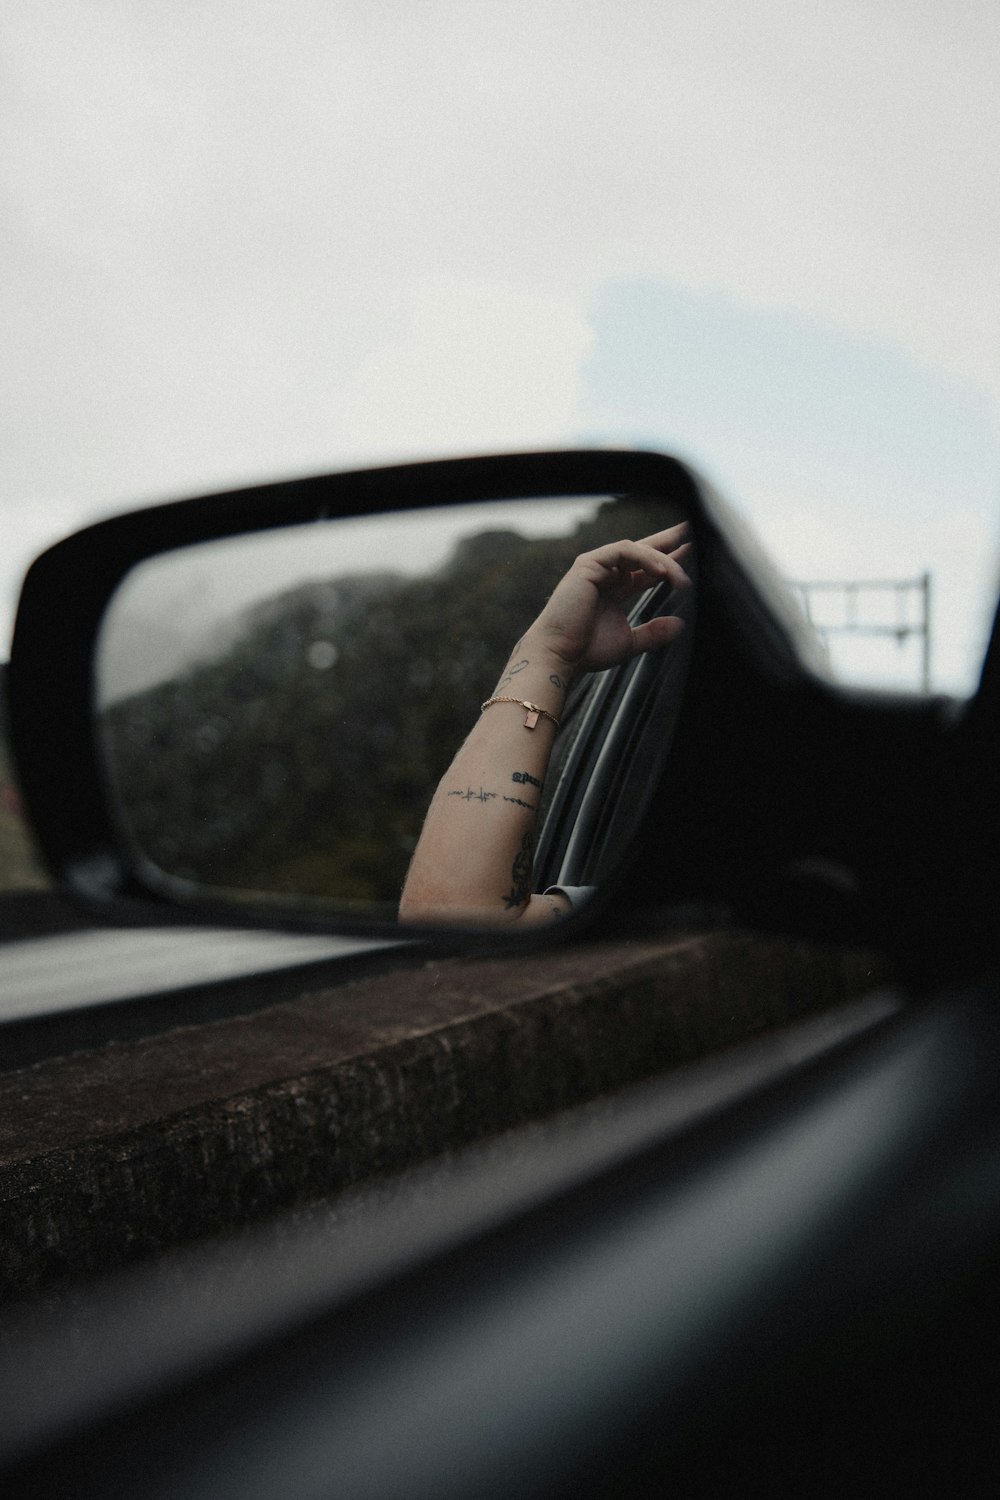 car side mirror showing car photo – Free Grey Image on Unsplash